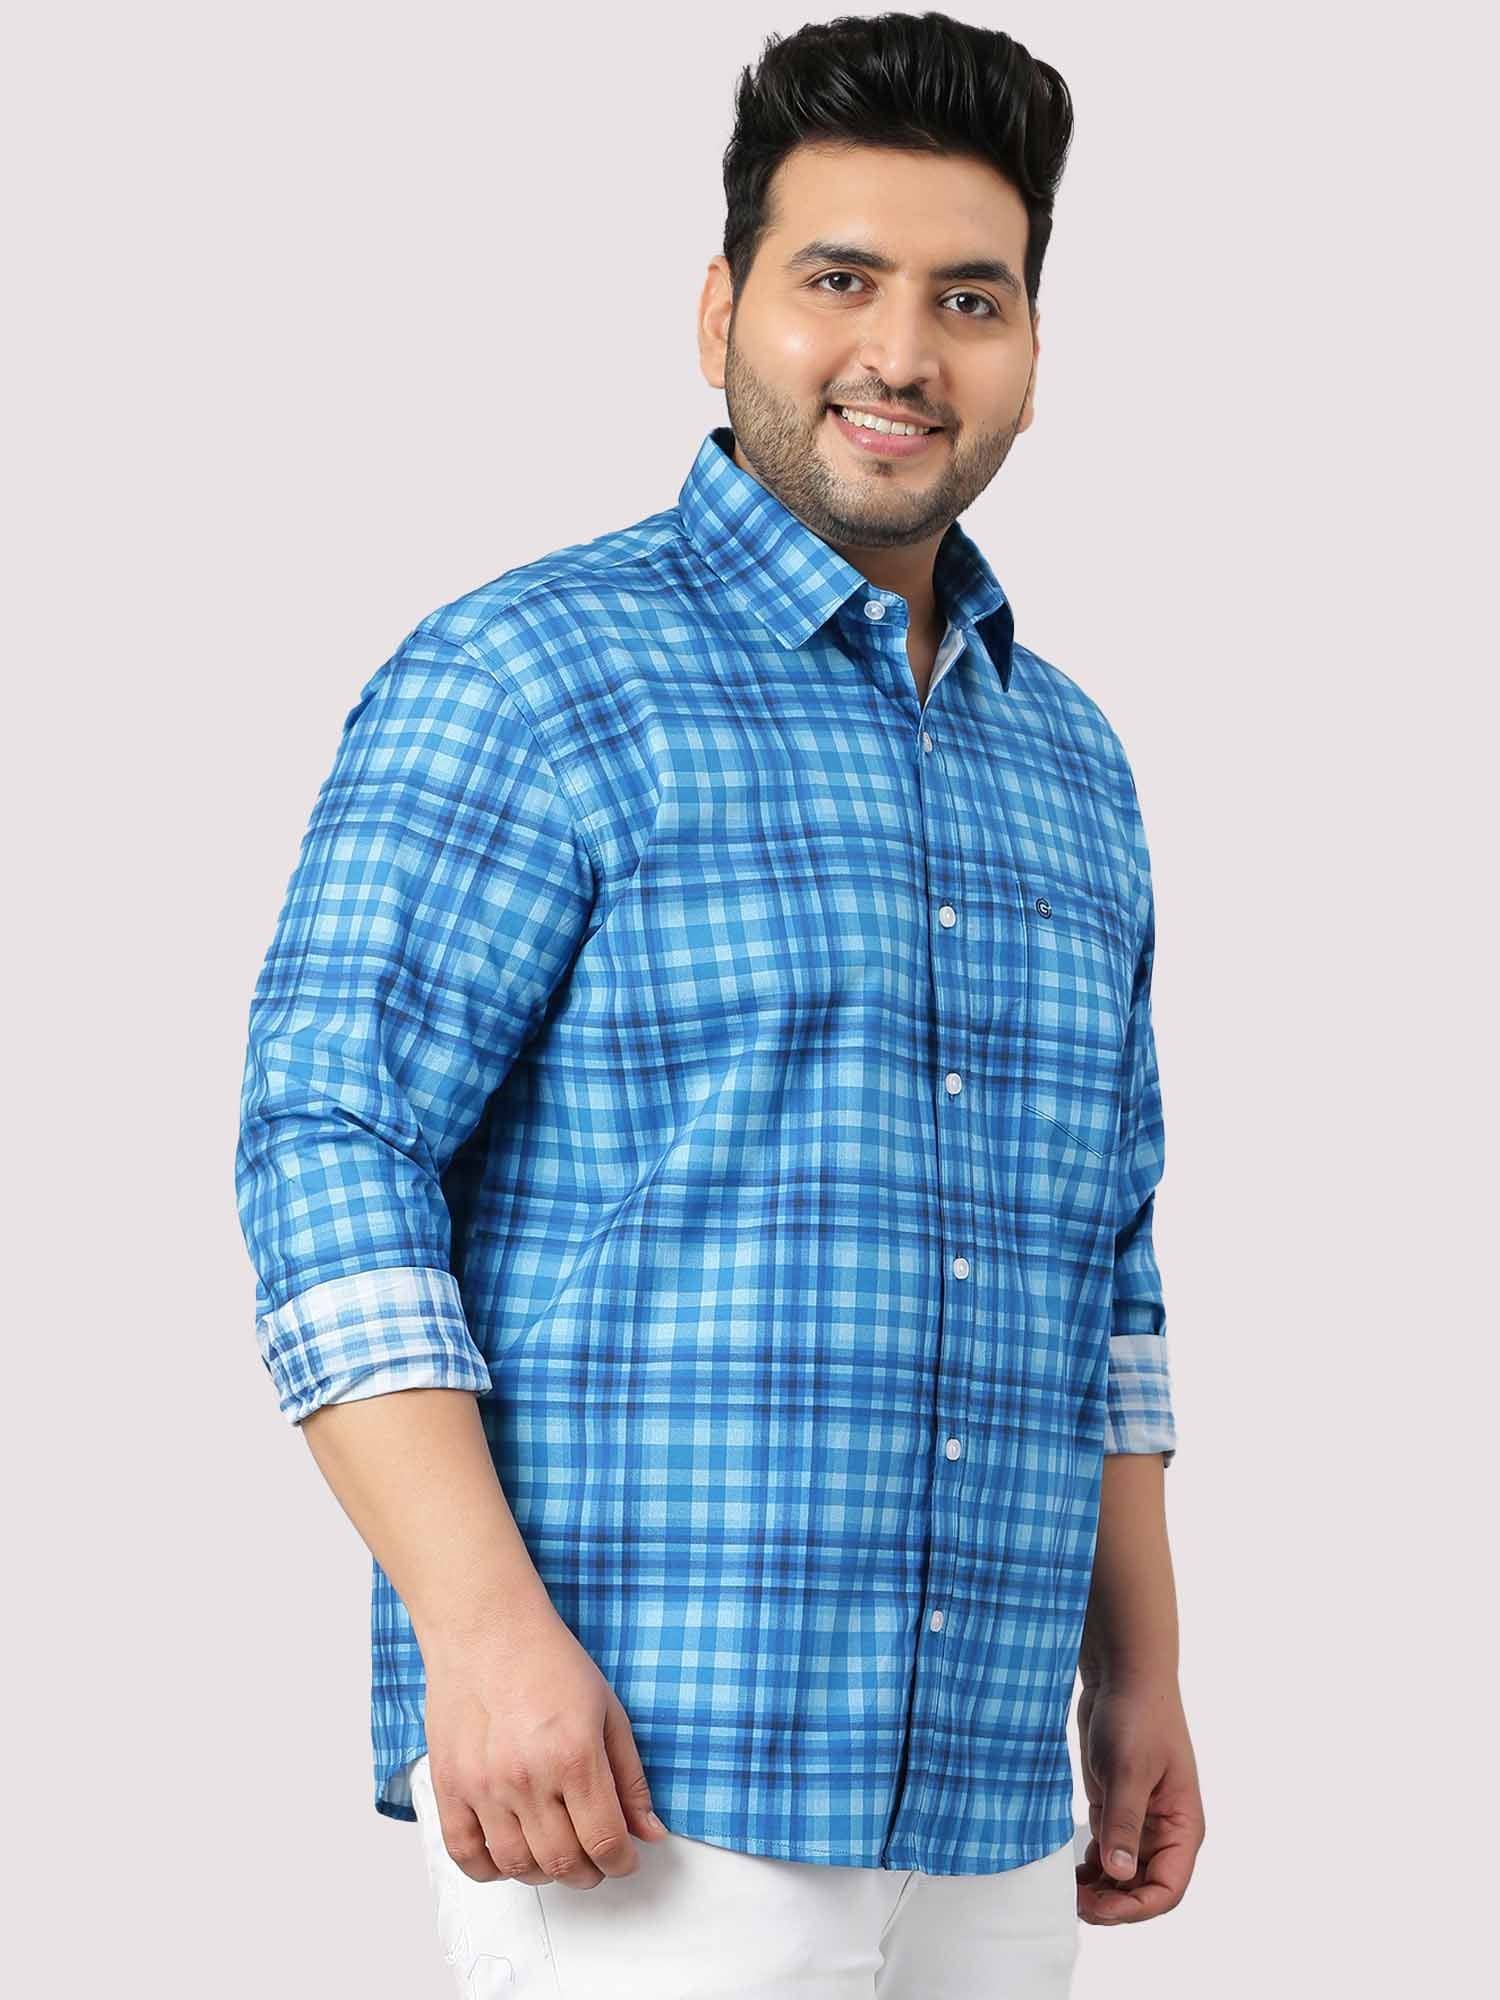 Sky Blue Large Check Shirt Men's Plus Size - Guniaa Fashions